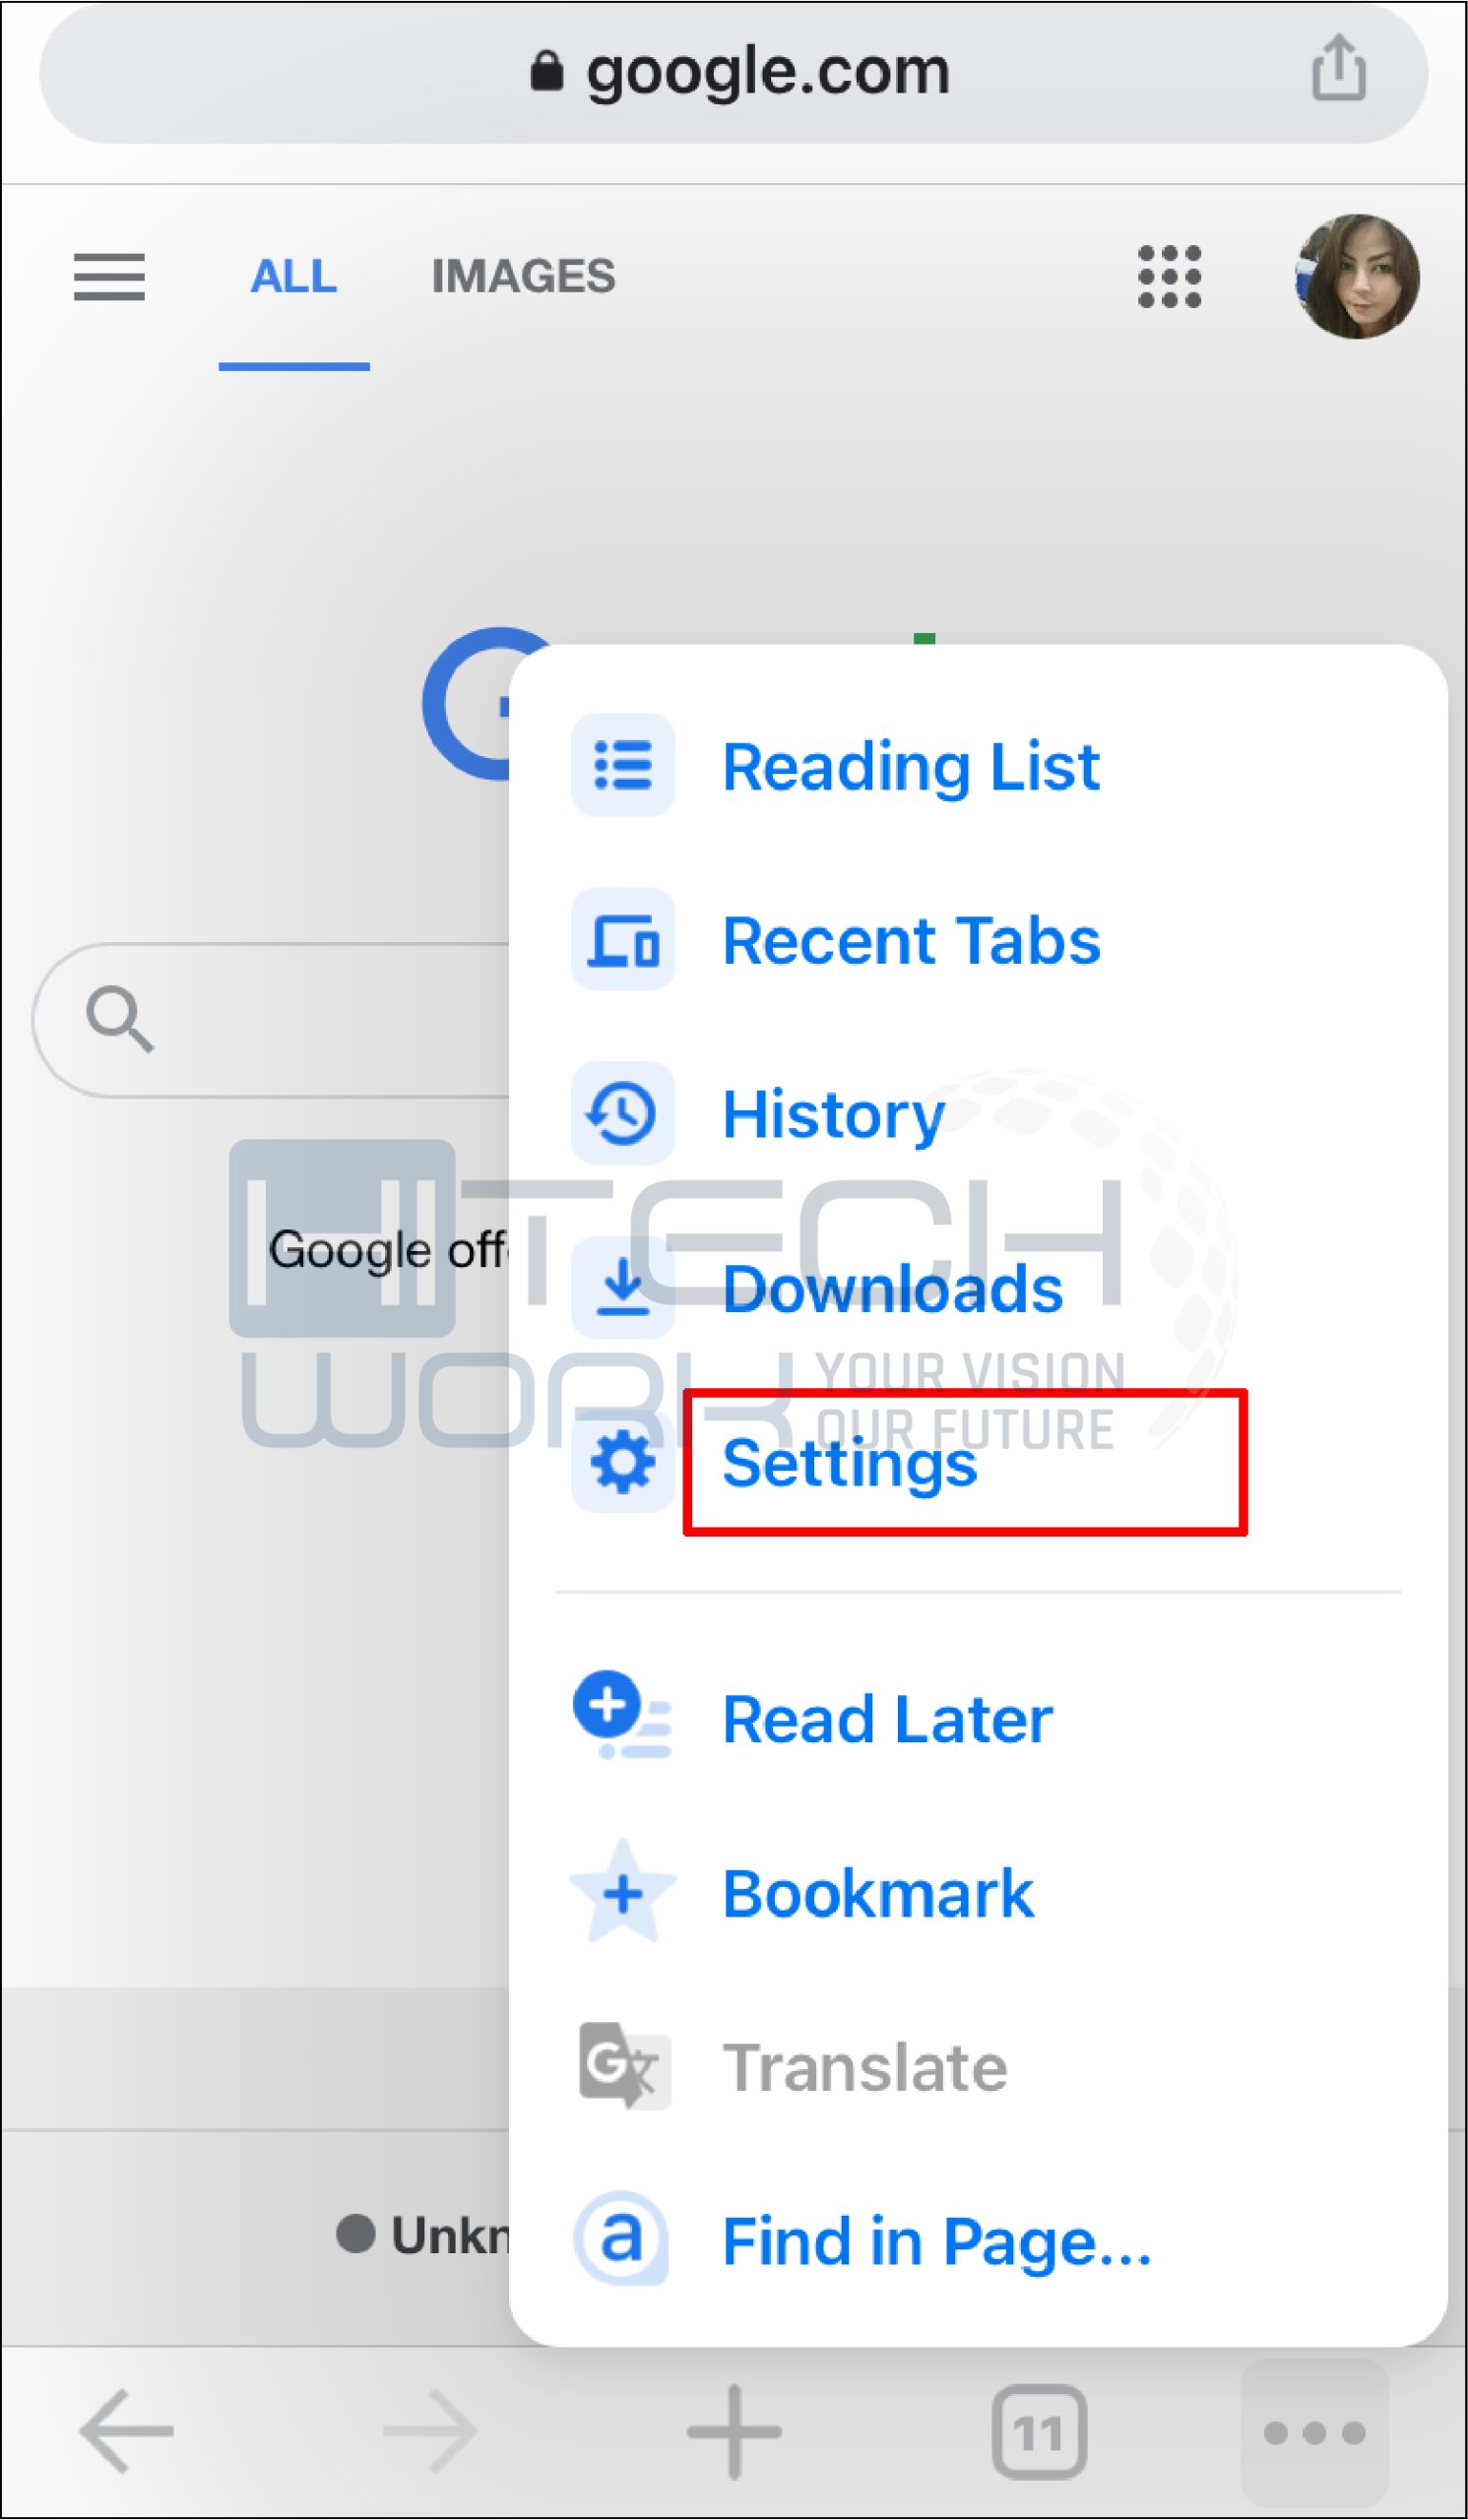 Select Settings